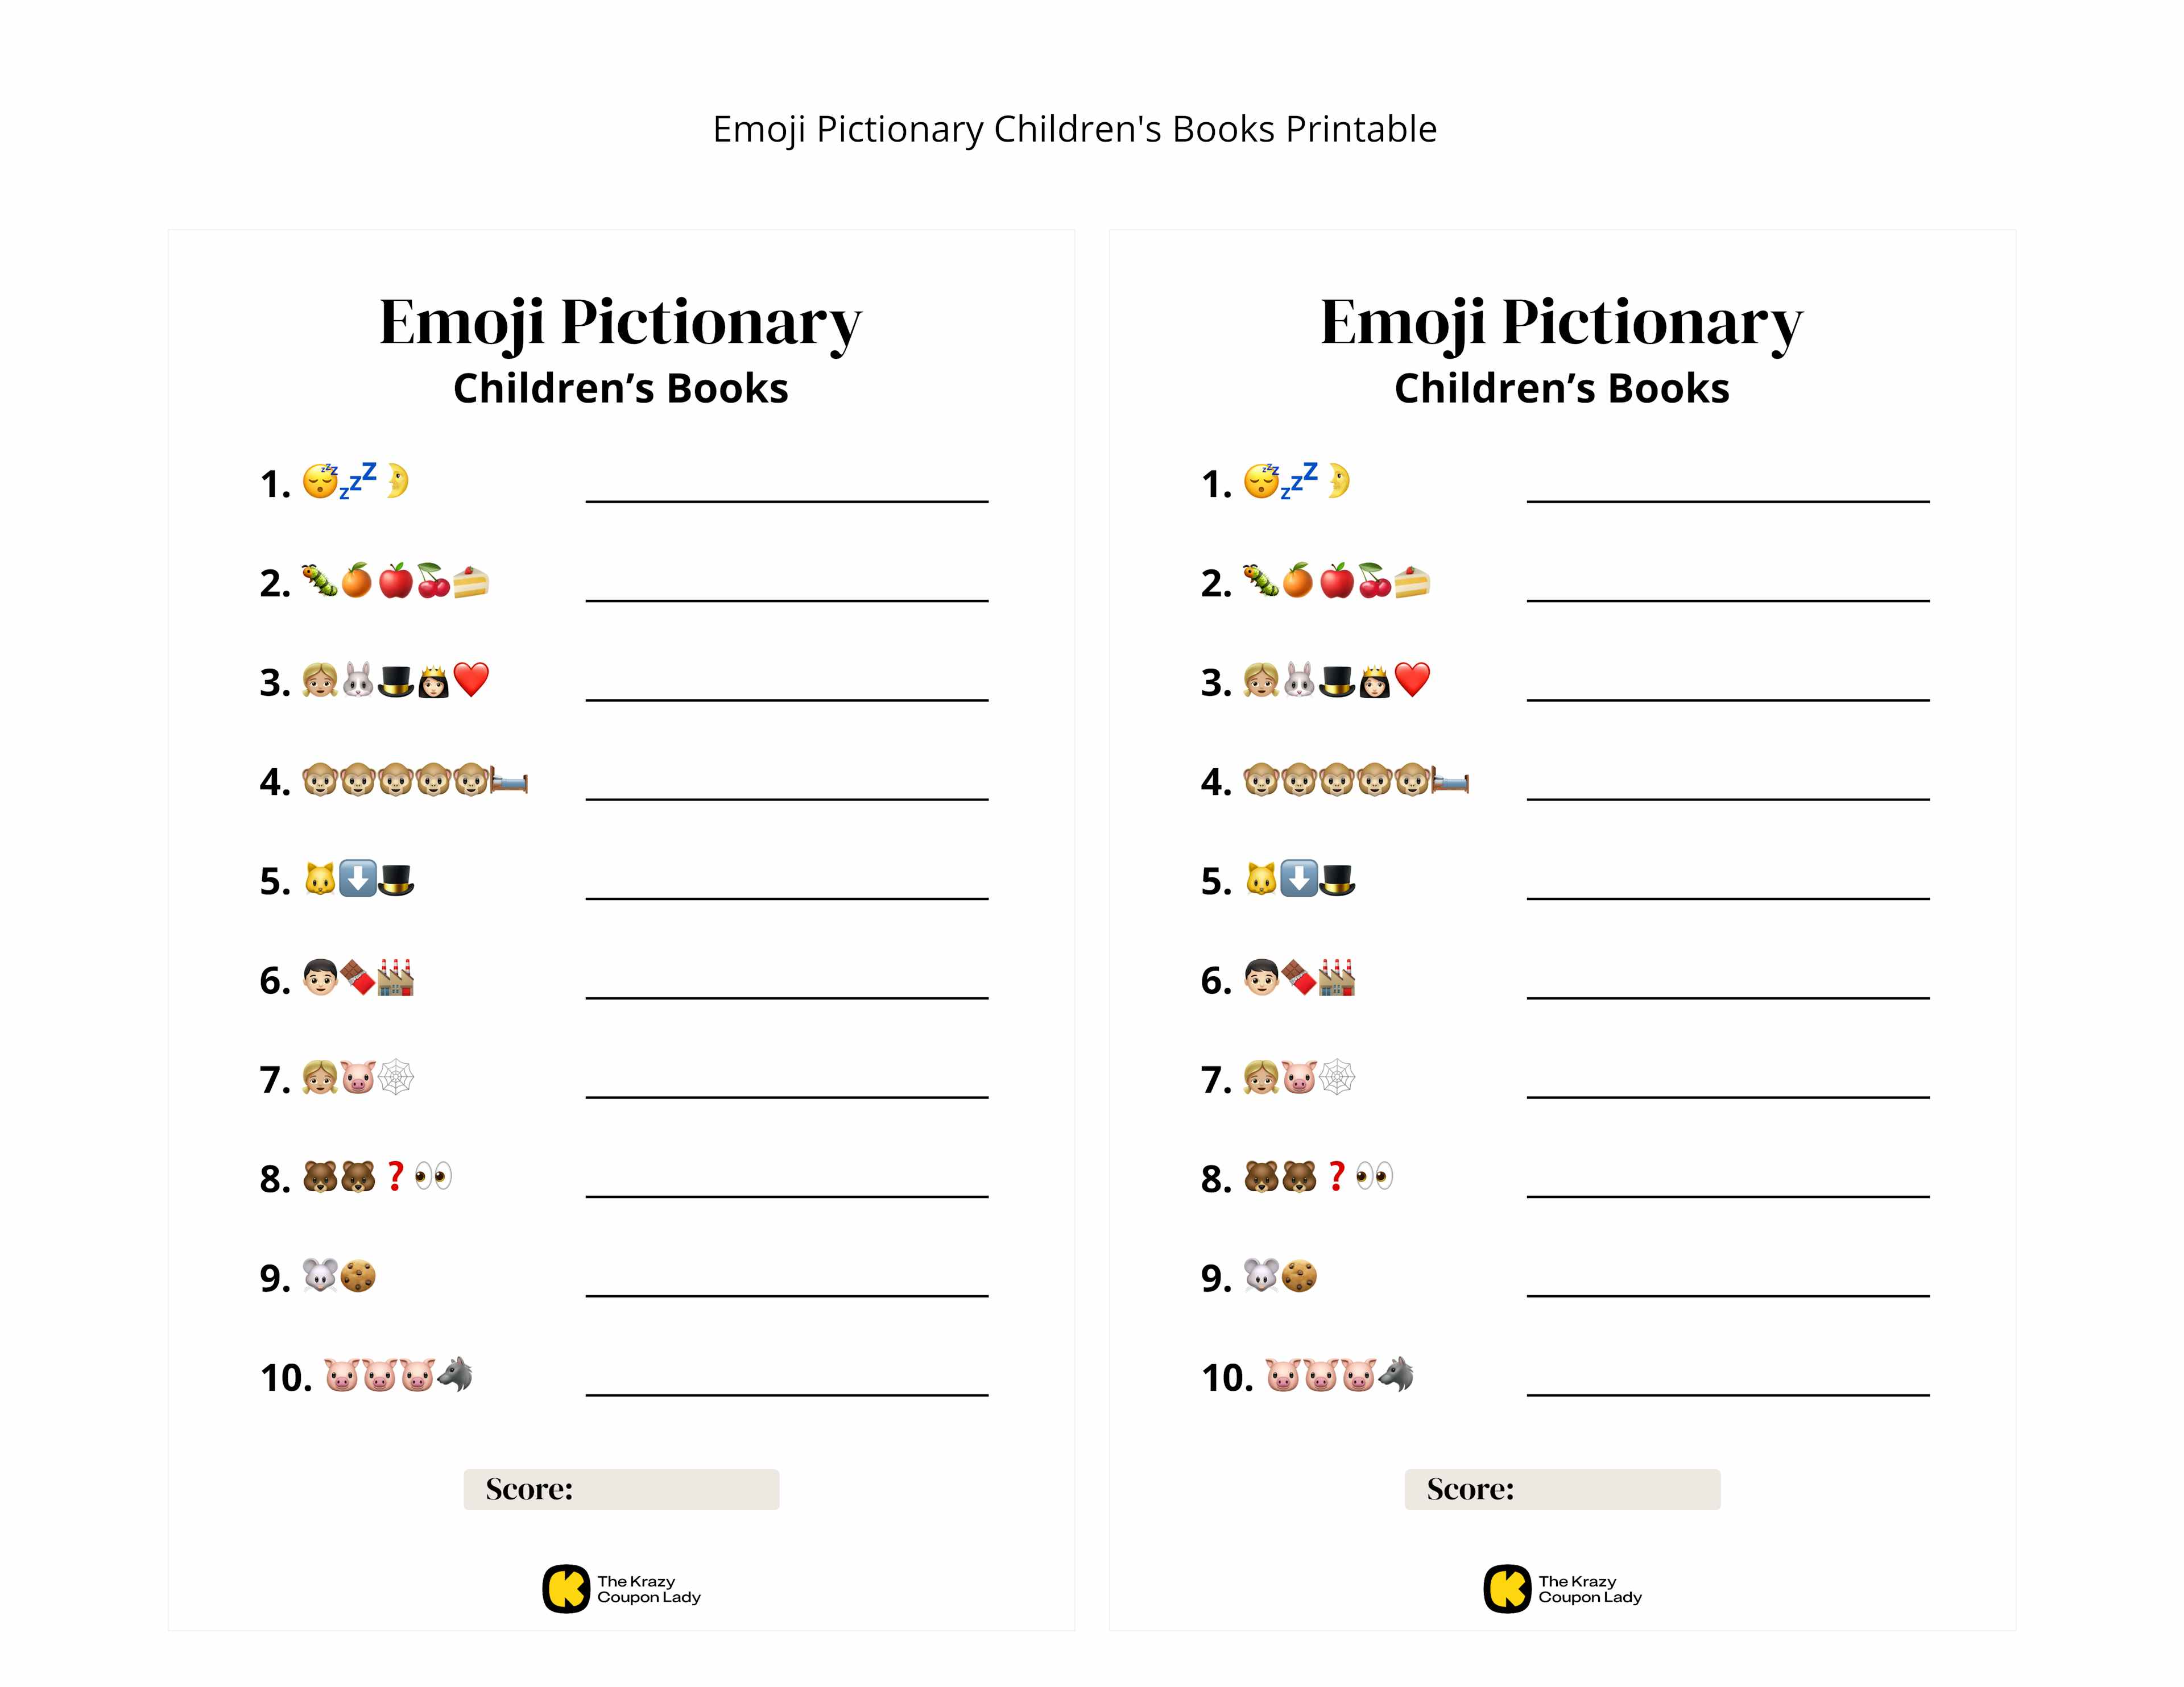 Emoji Pictionary Children's Books printable game